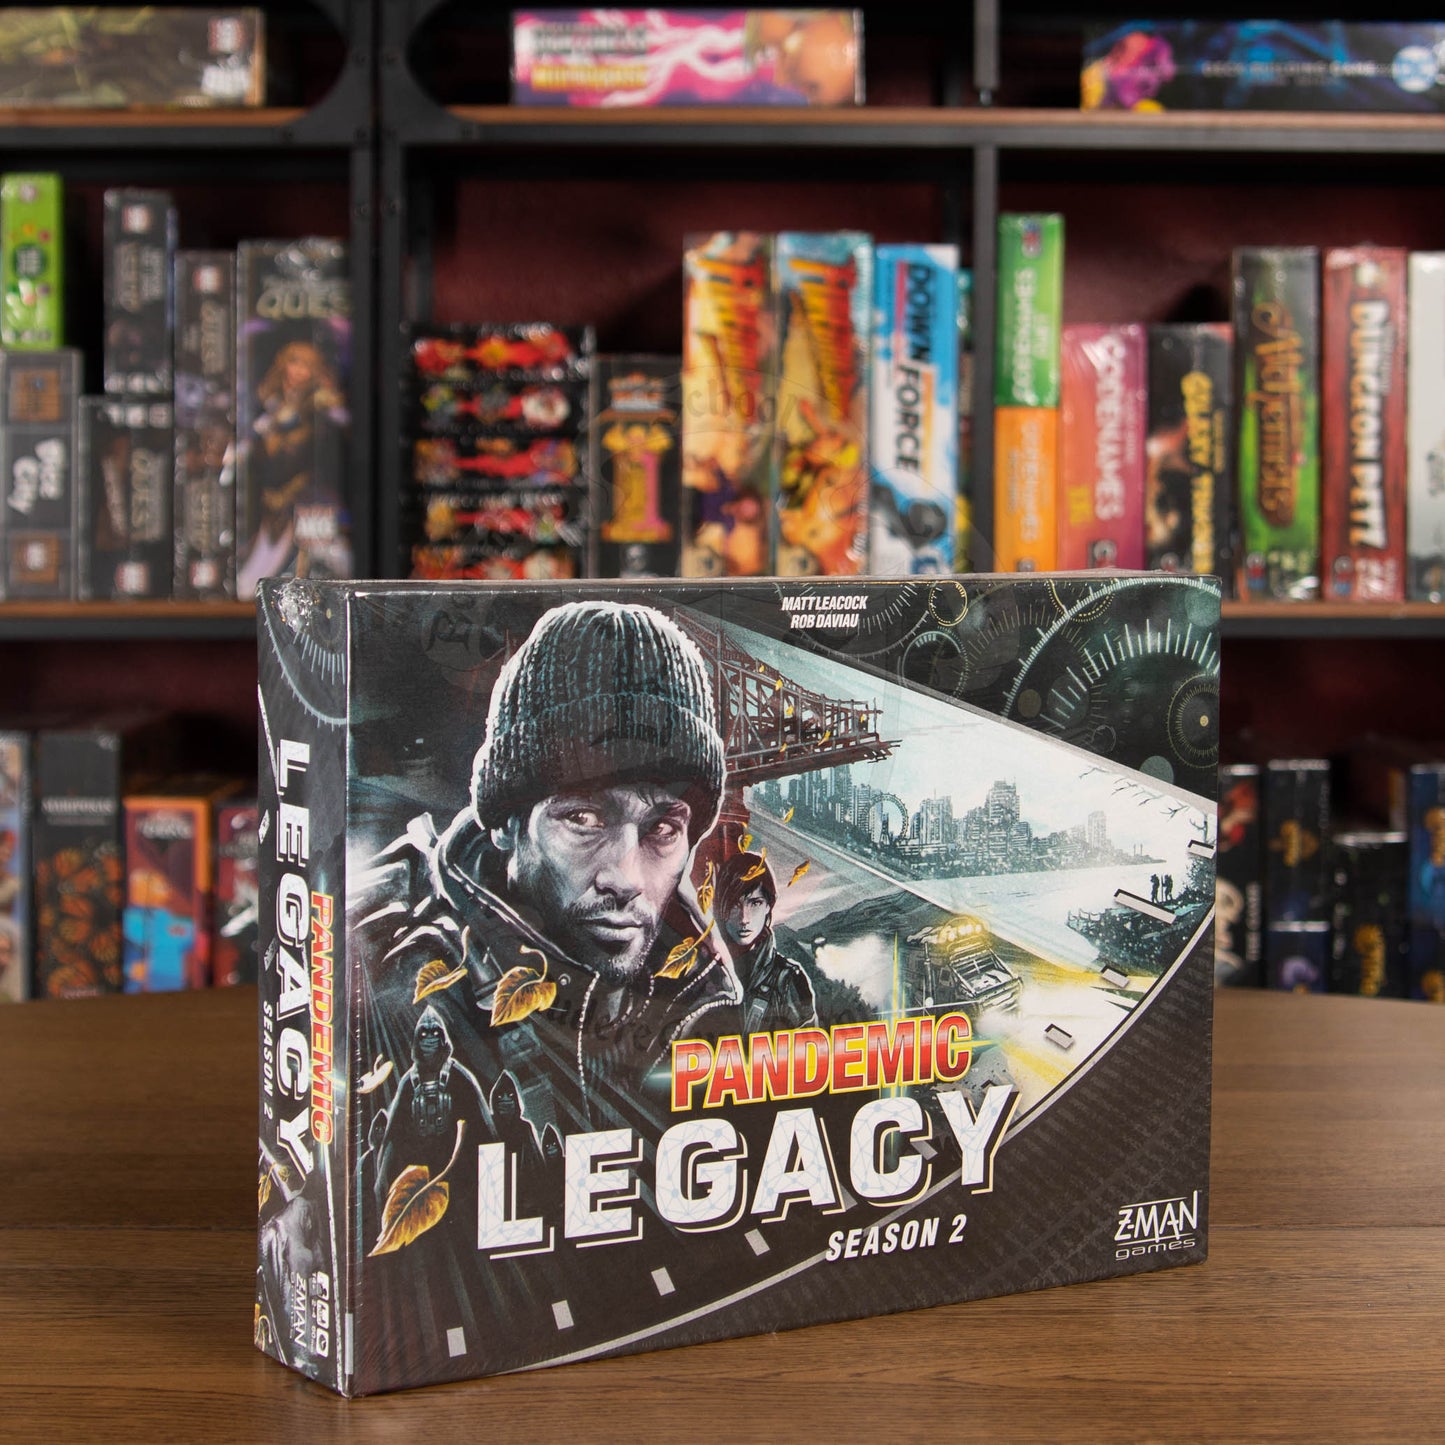 (BSG Certified USED) Pandemic: Legacy Season 2 (Black Edition)